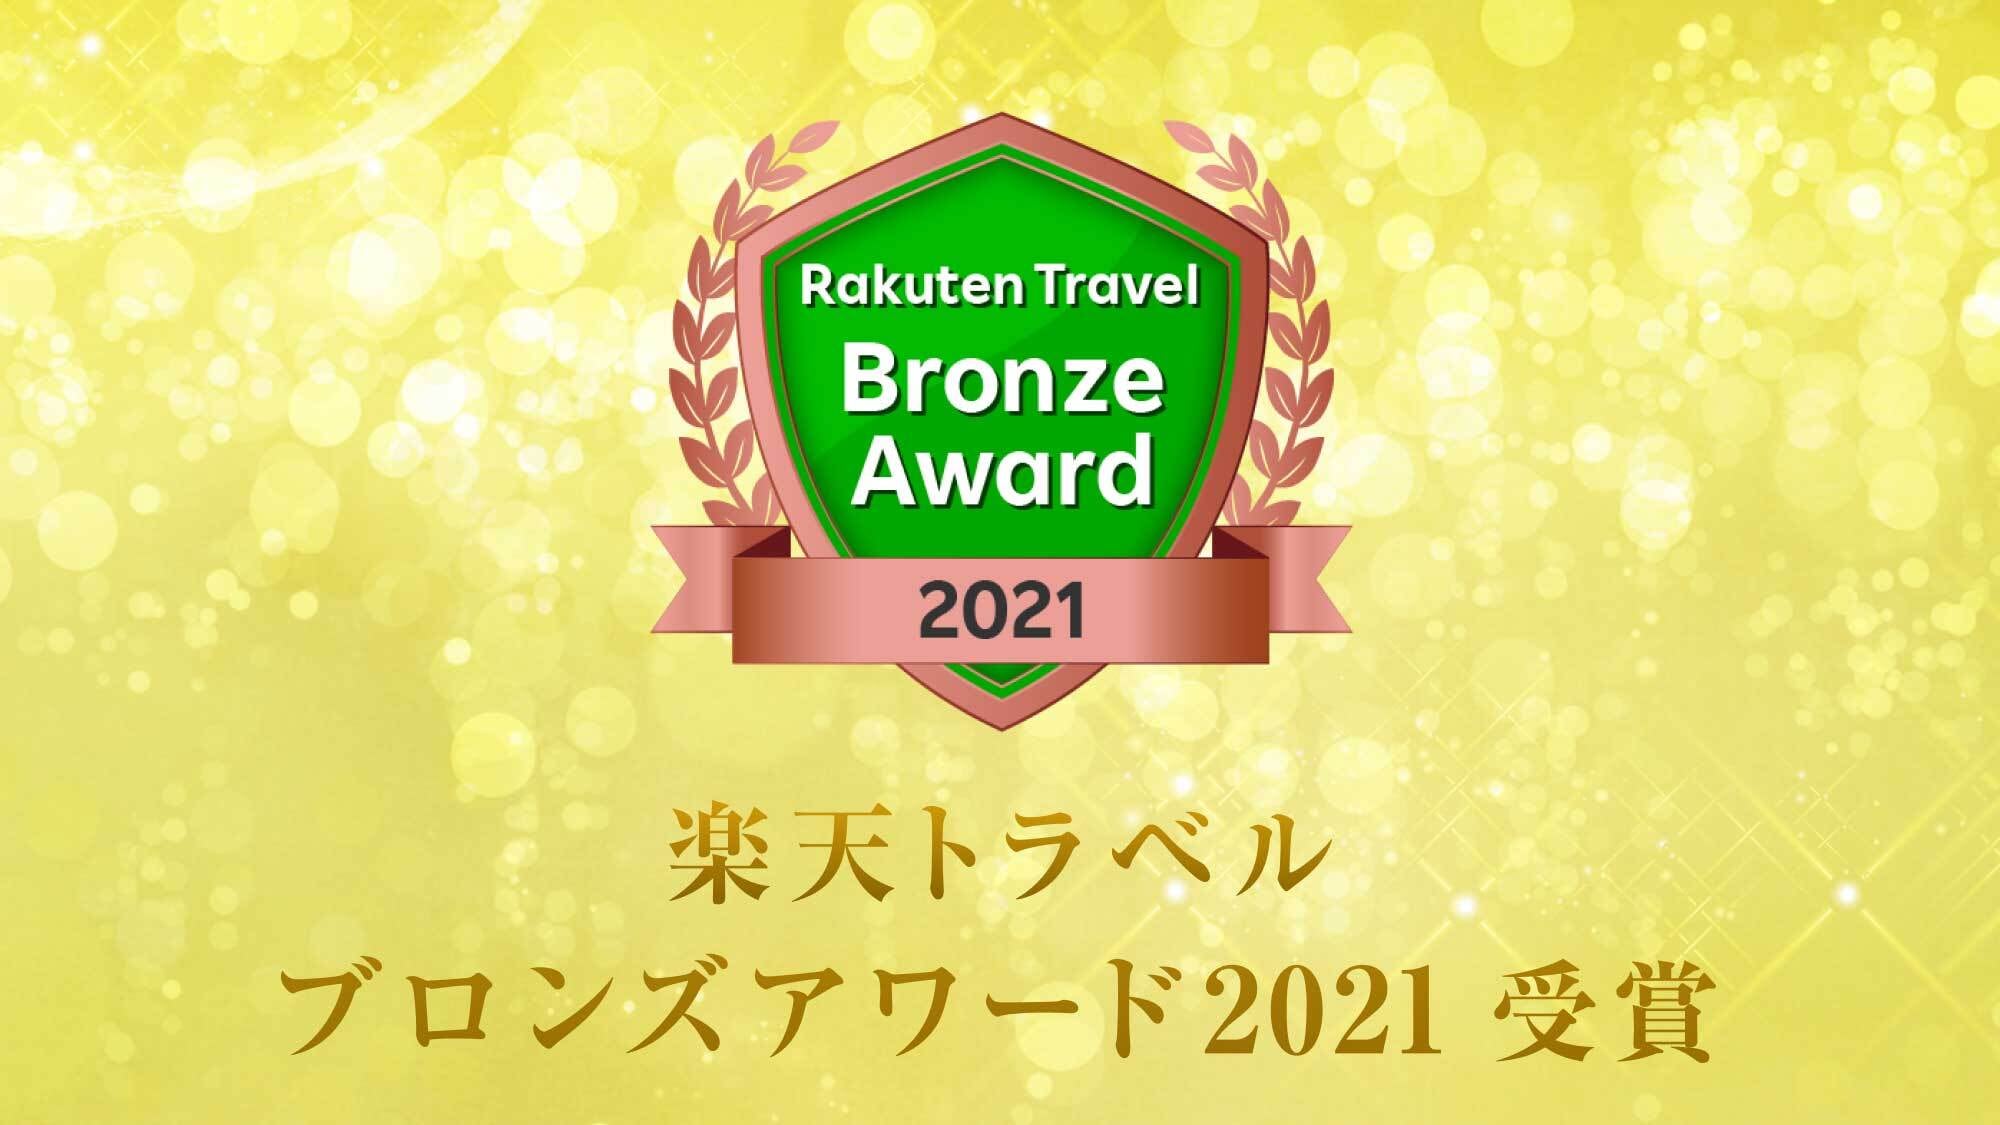 Bronze Award 2021 Winner